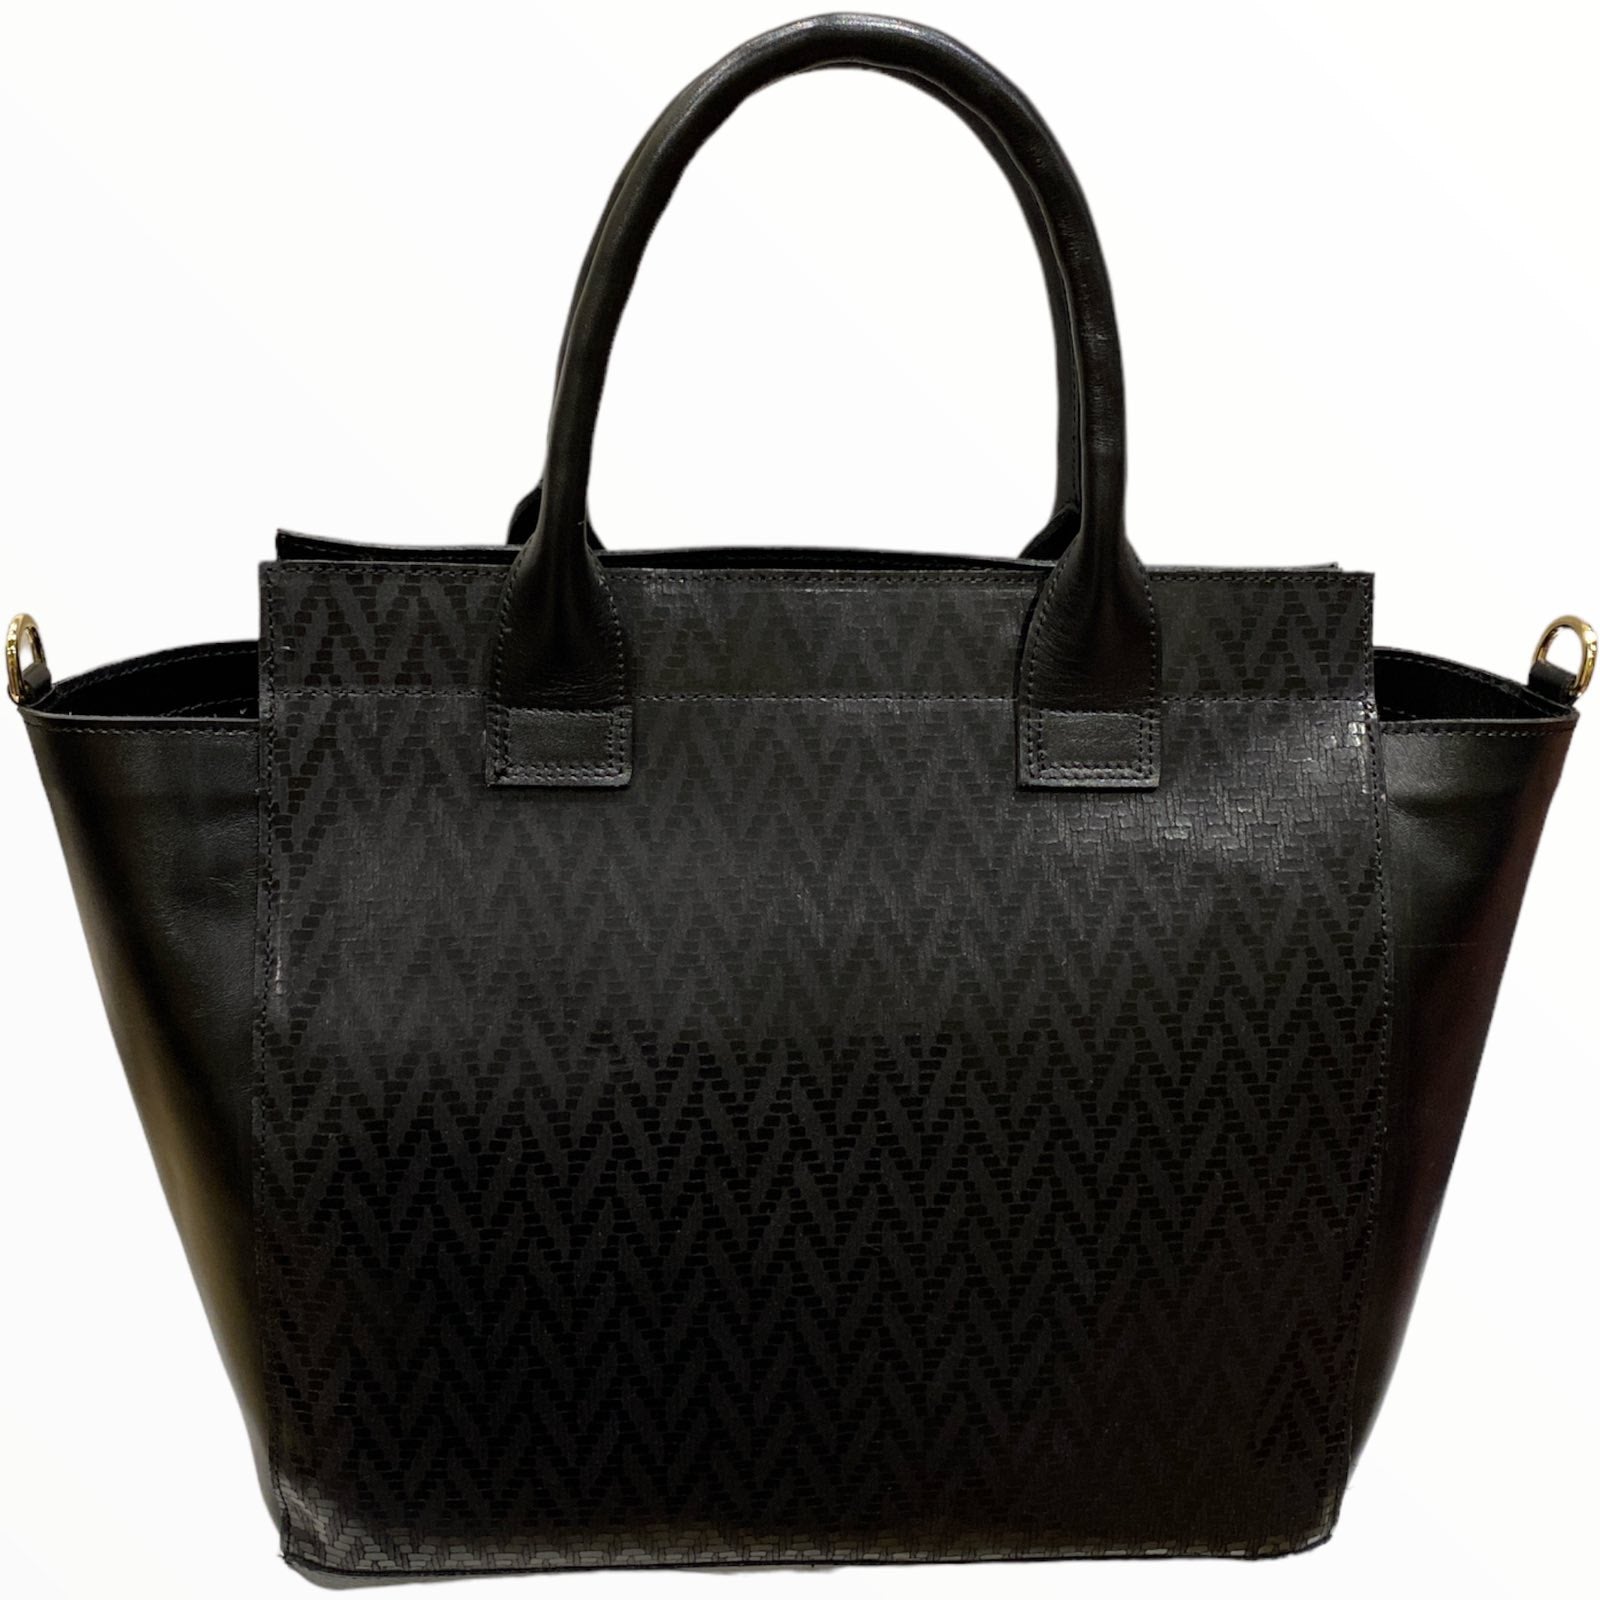 Gina large. Black geometric leather tote bag